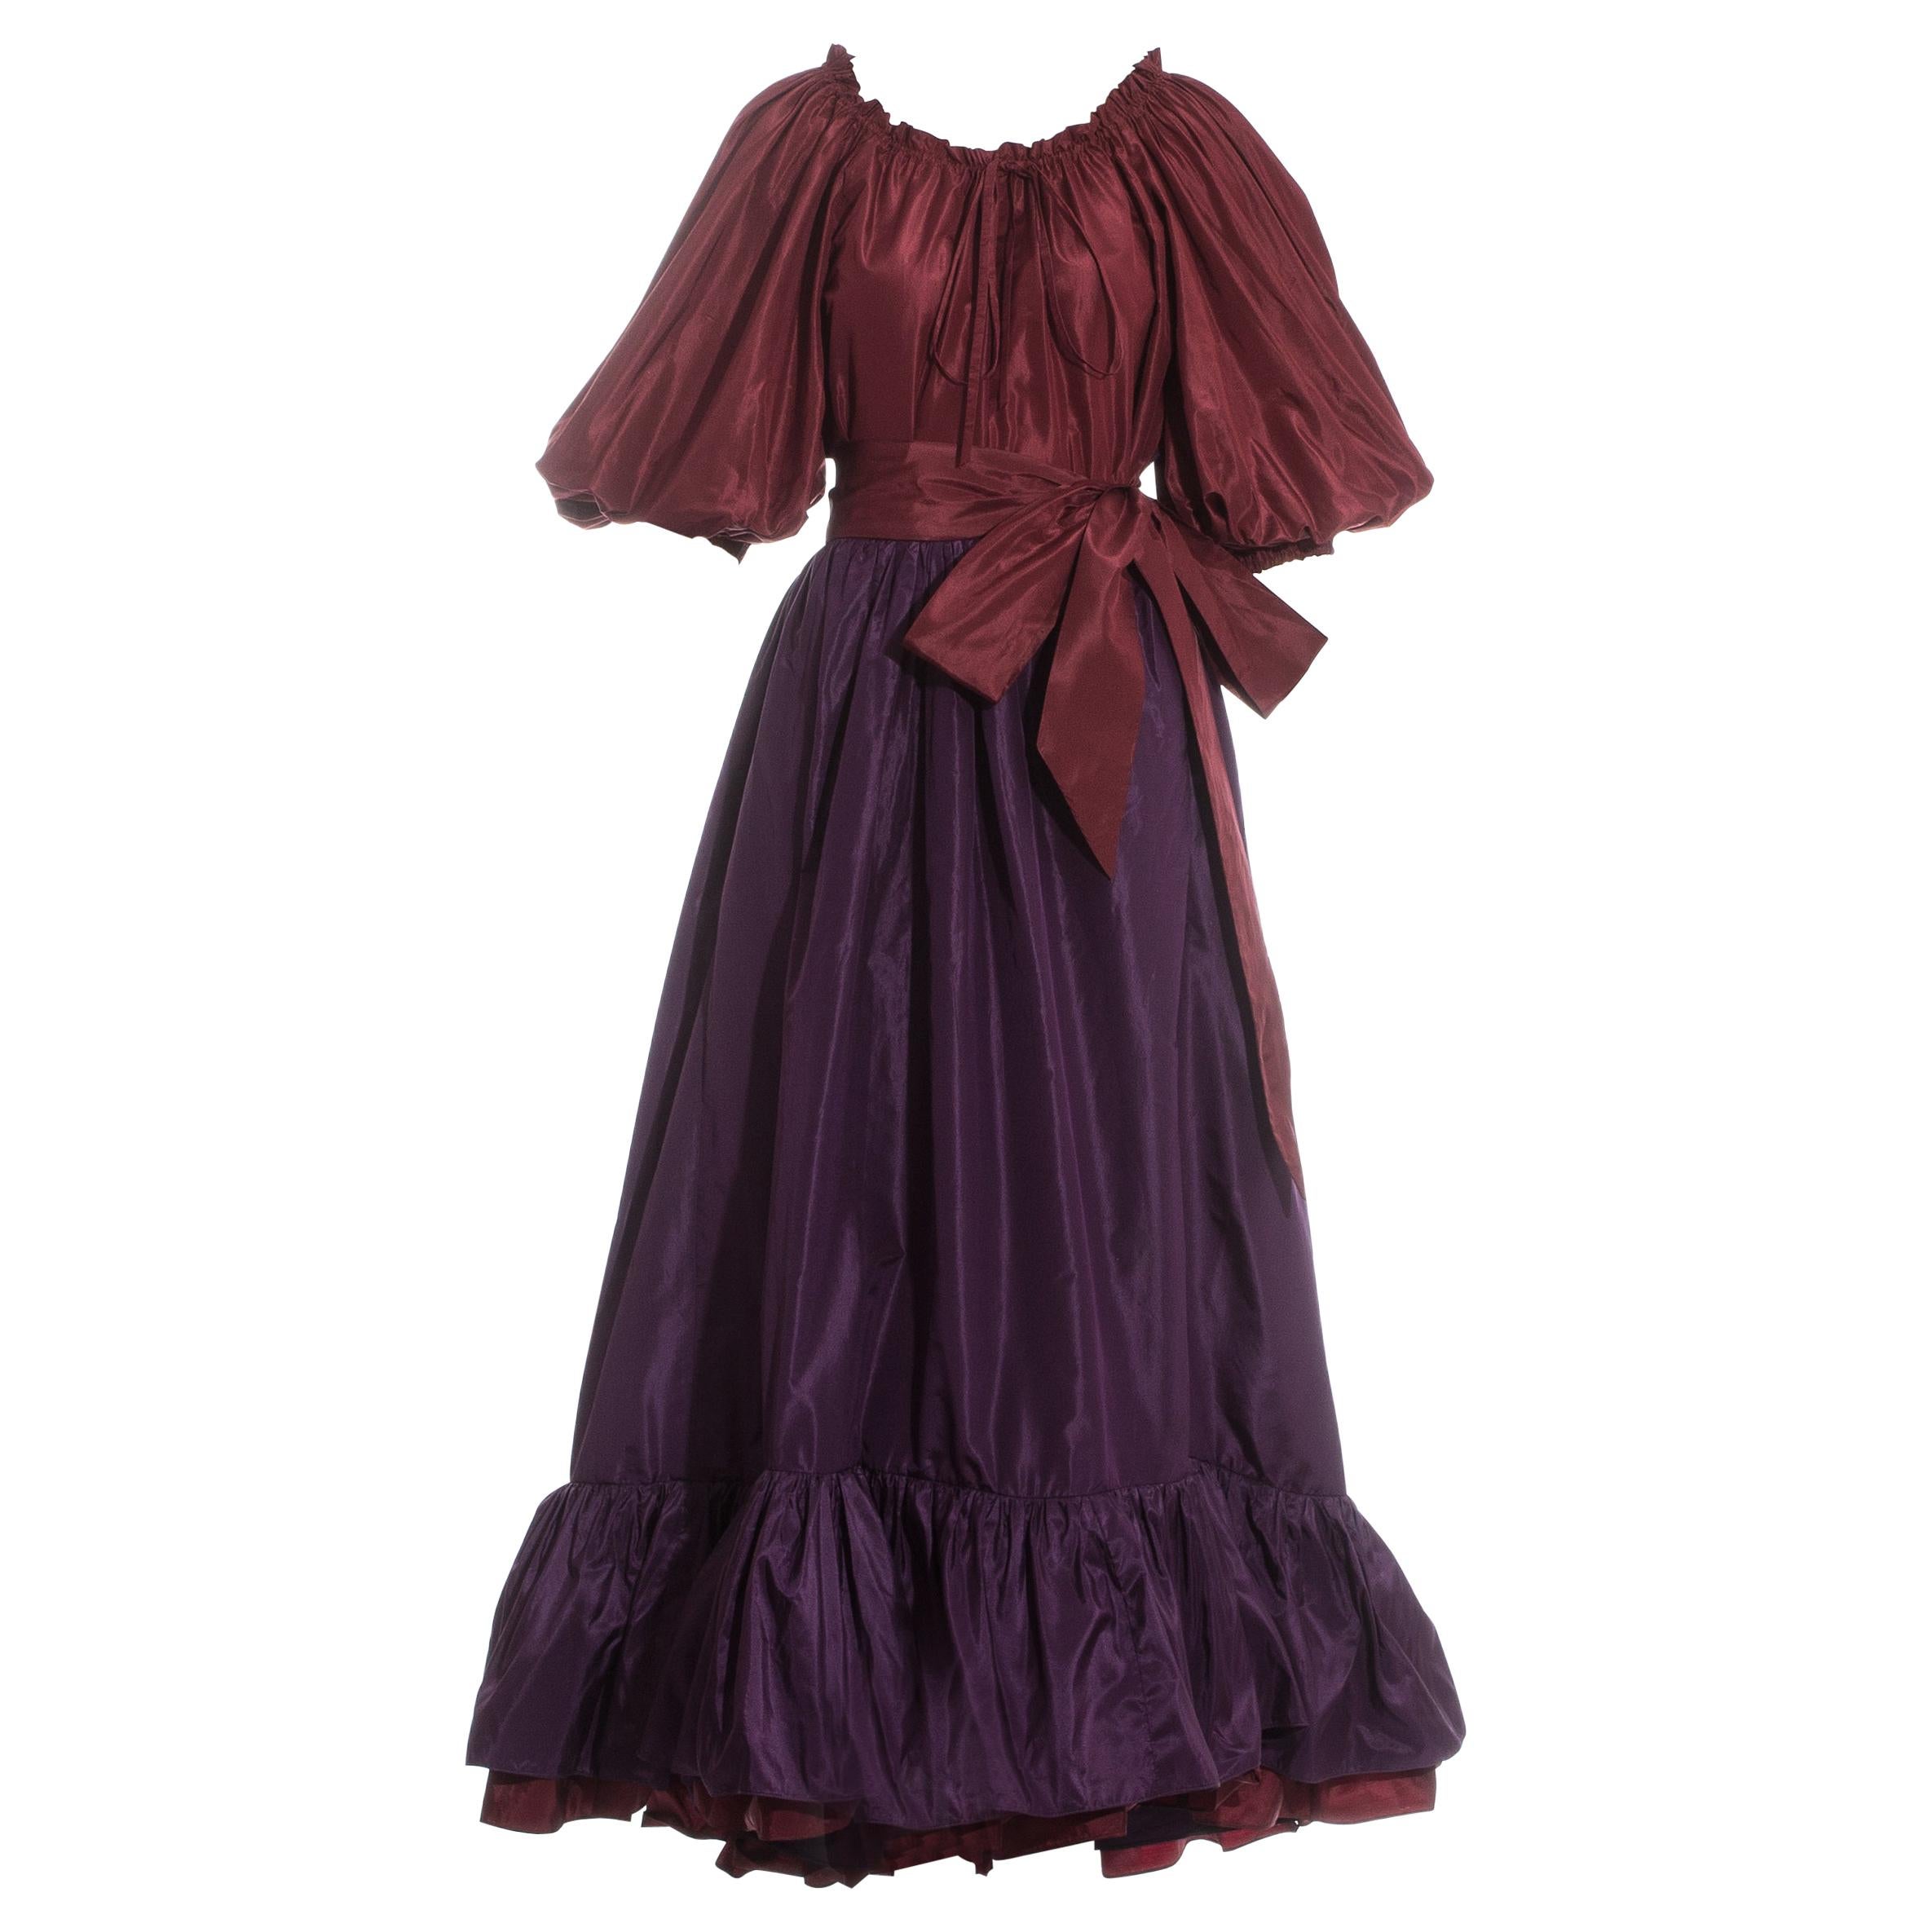 Yves Saint Laurent silk taffeta plum ruffled evening dress, ss 1978